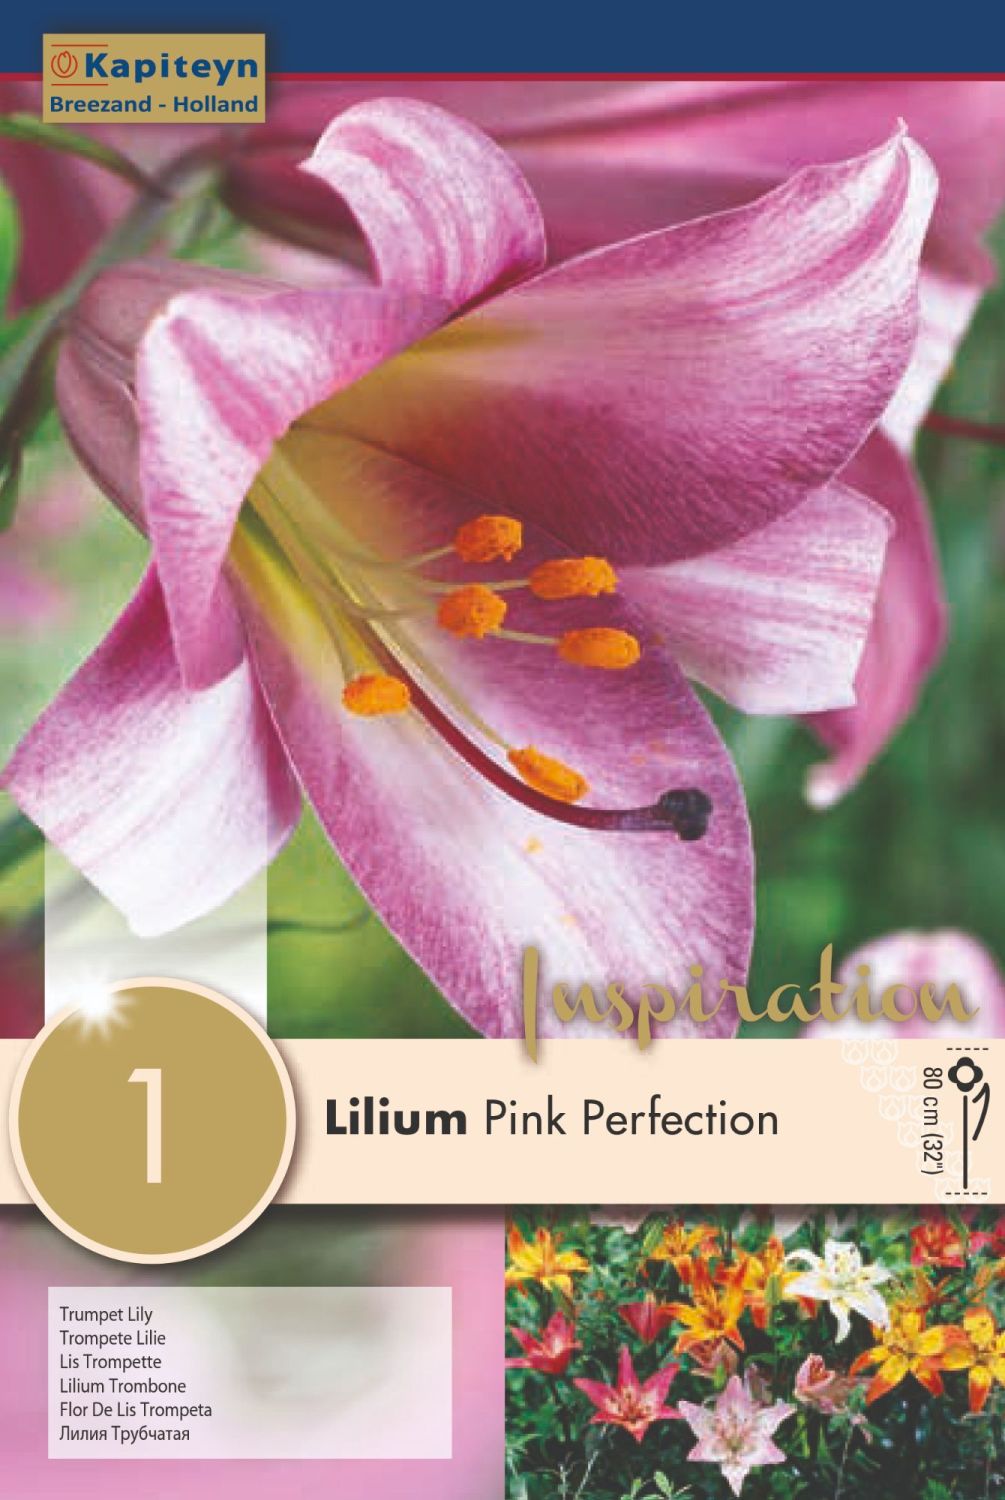 LILIUM PINK PERFECTION